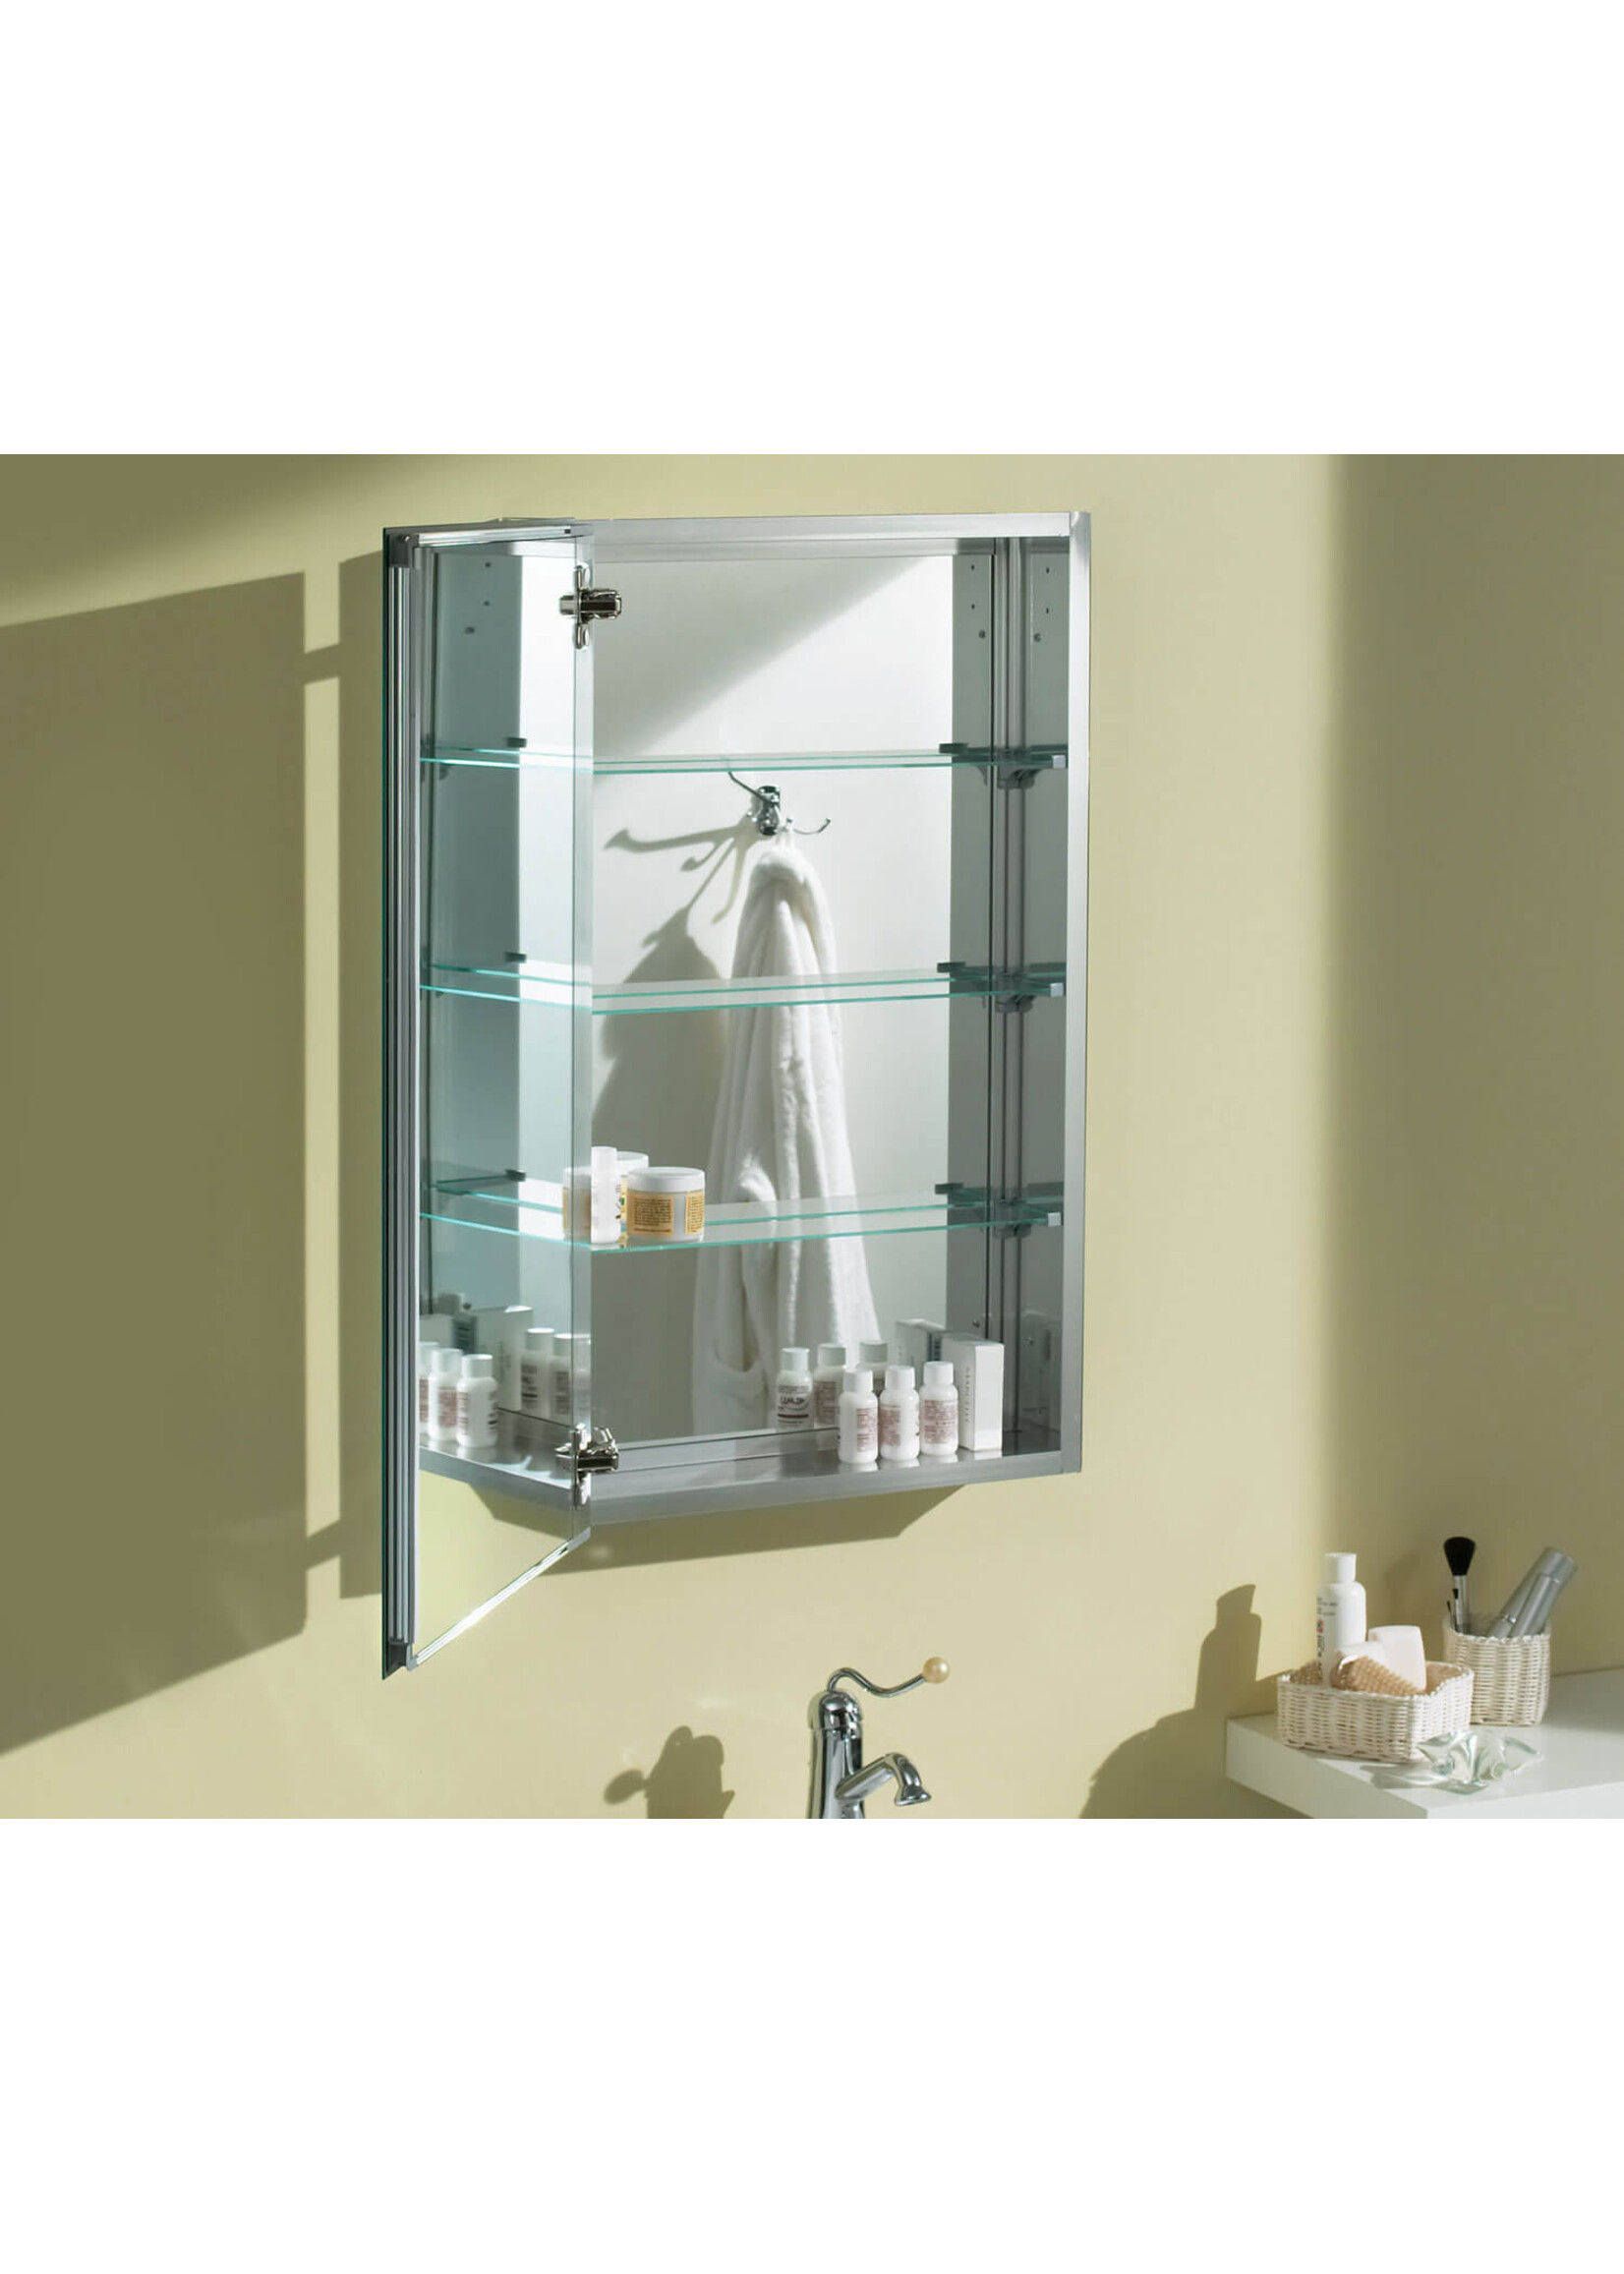 MAAX Maax Single View 12x30 Medicine Cabinet - Beveled Edge chrome frame